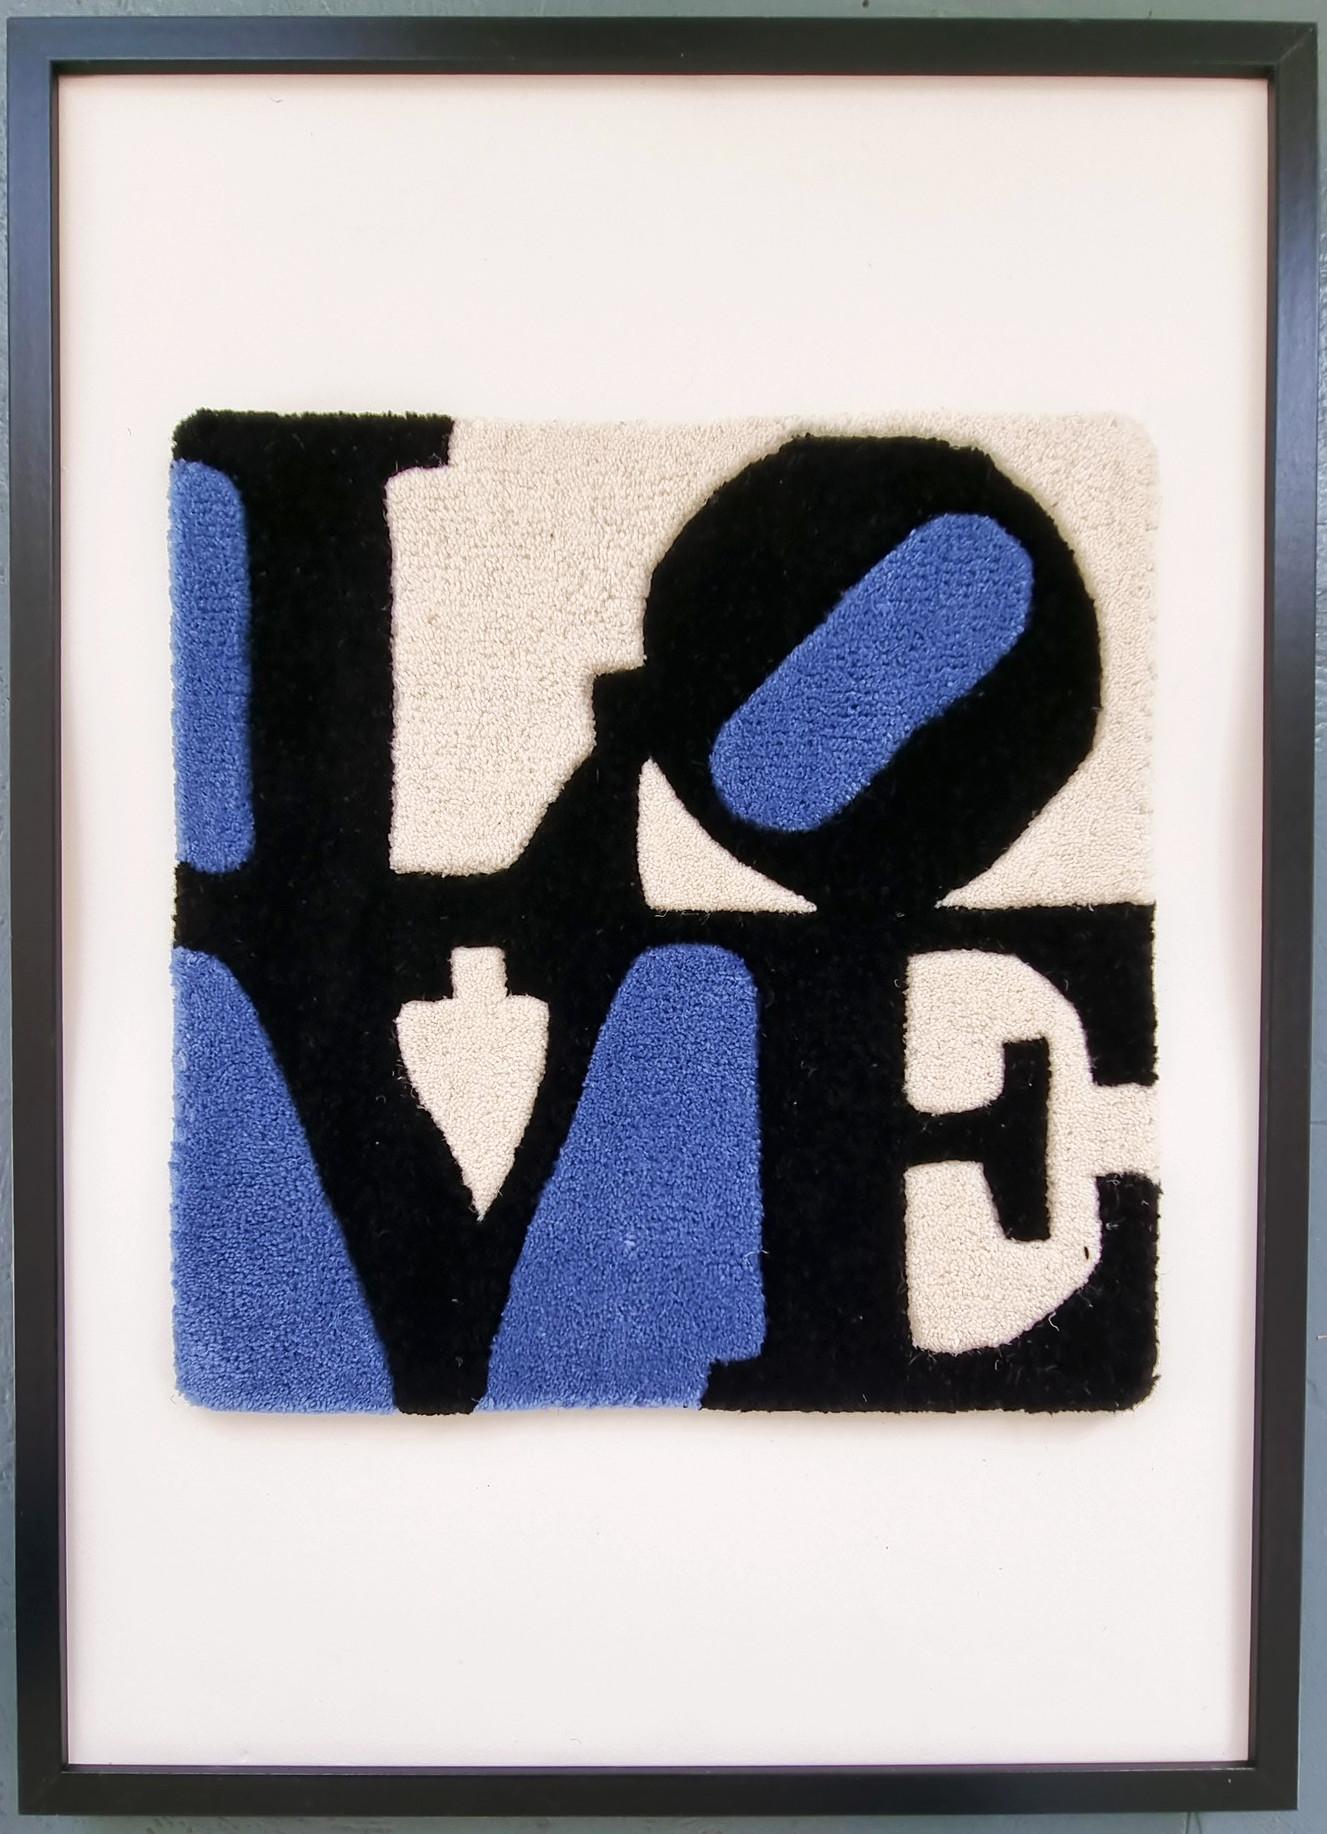 Estonian LOVE (Pop Art, Modern, Neo-Dada, LOVE) - Print by Robert Indiana